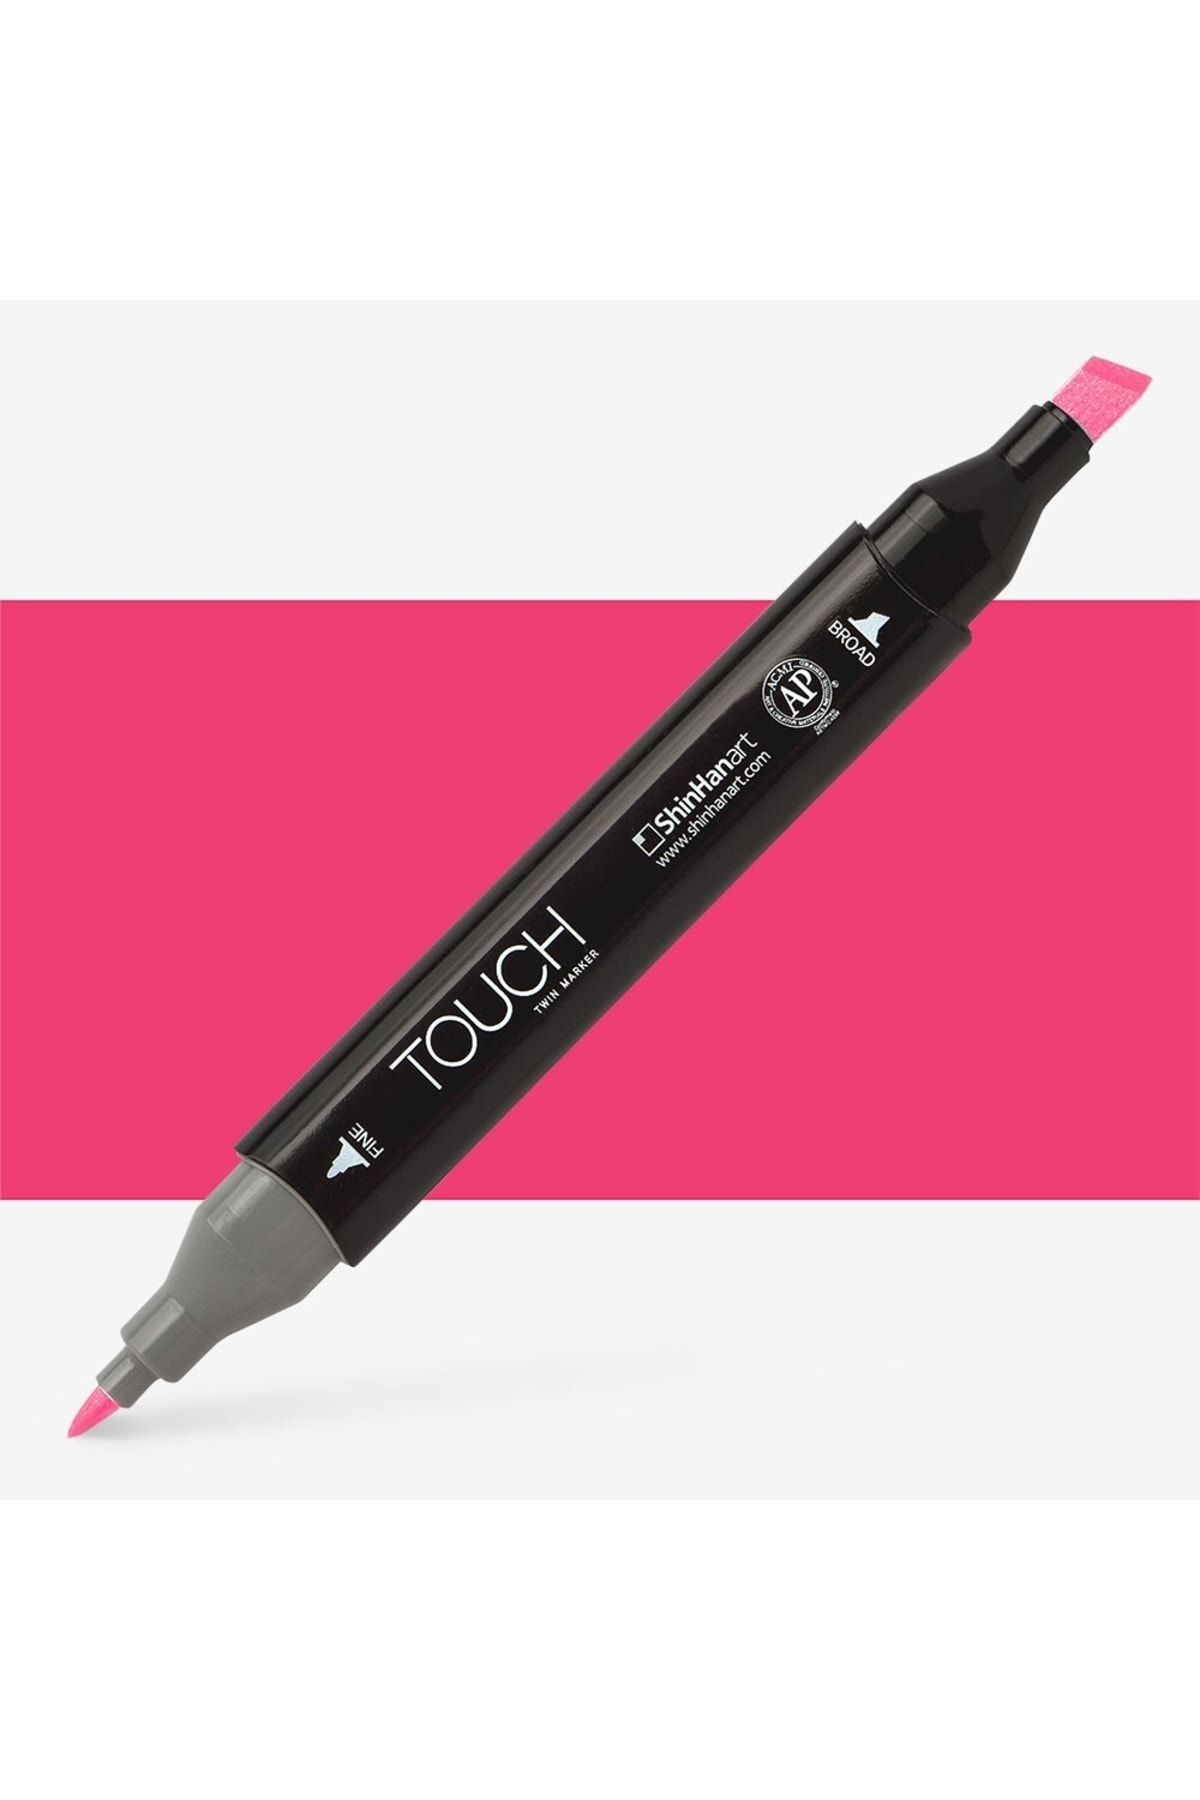 Shinhan Art Touch Twin Marker Pen : Çift Uçlu Marker Kalemi : Cherry Pınk : R5